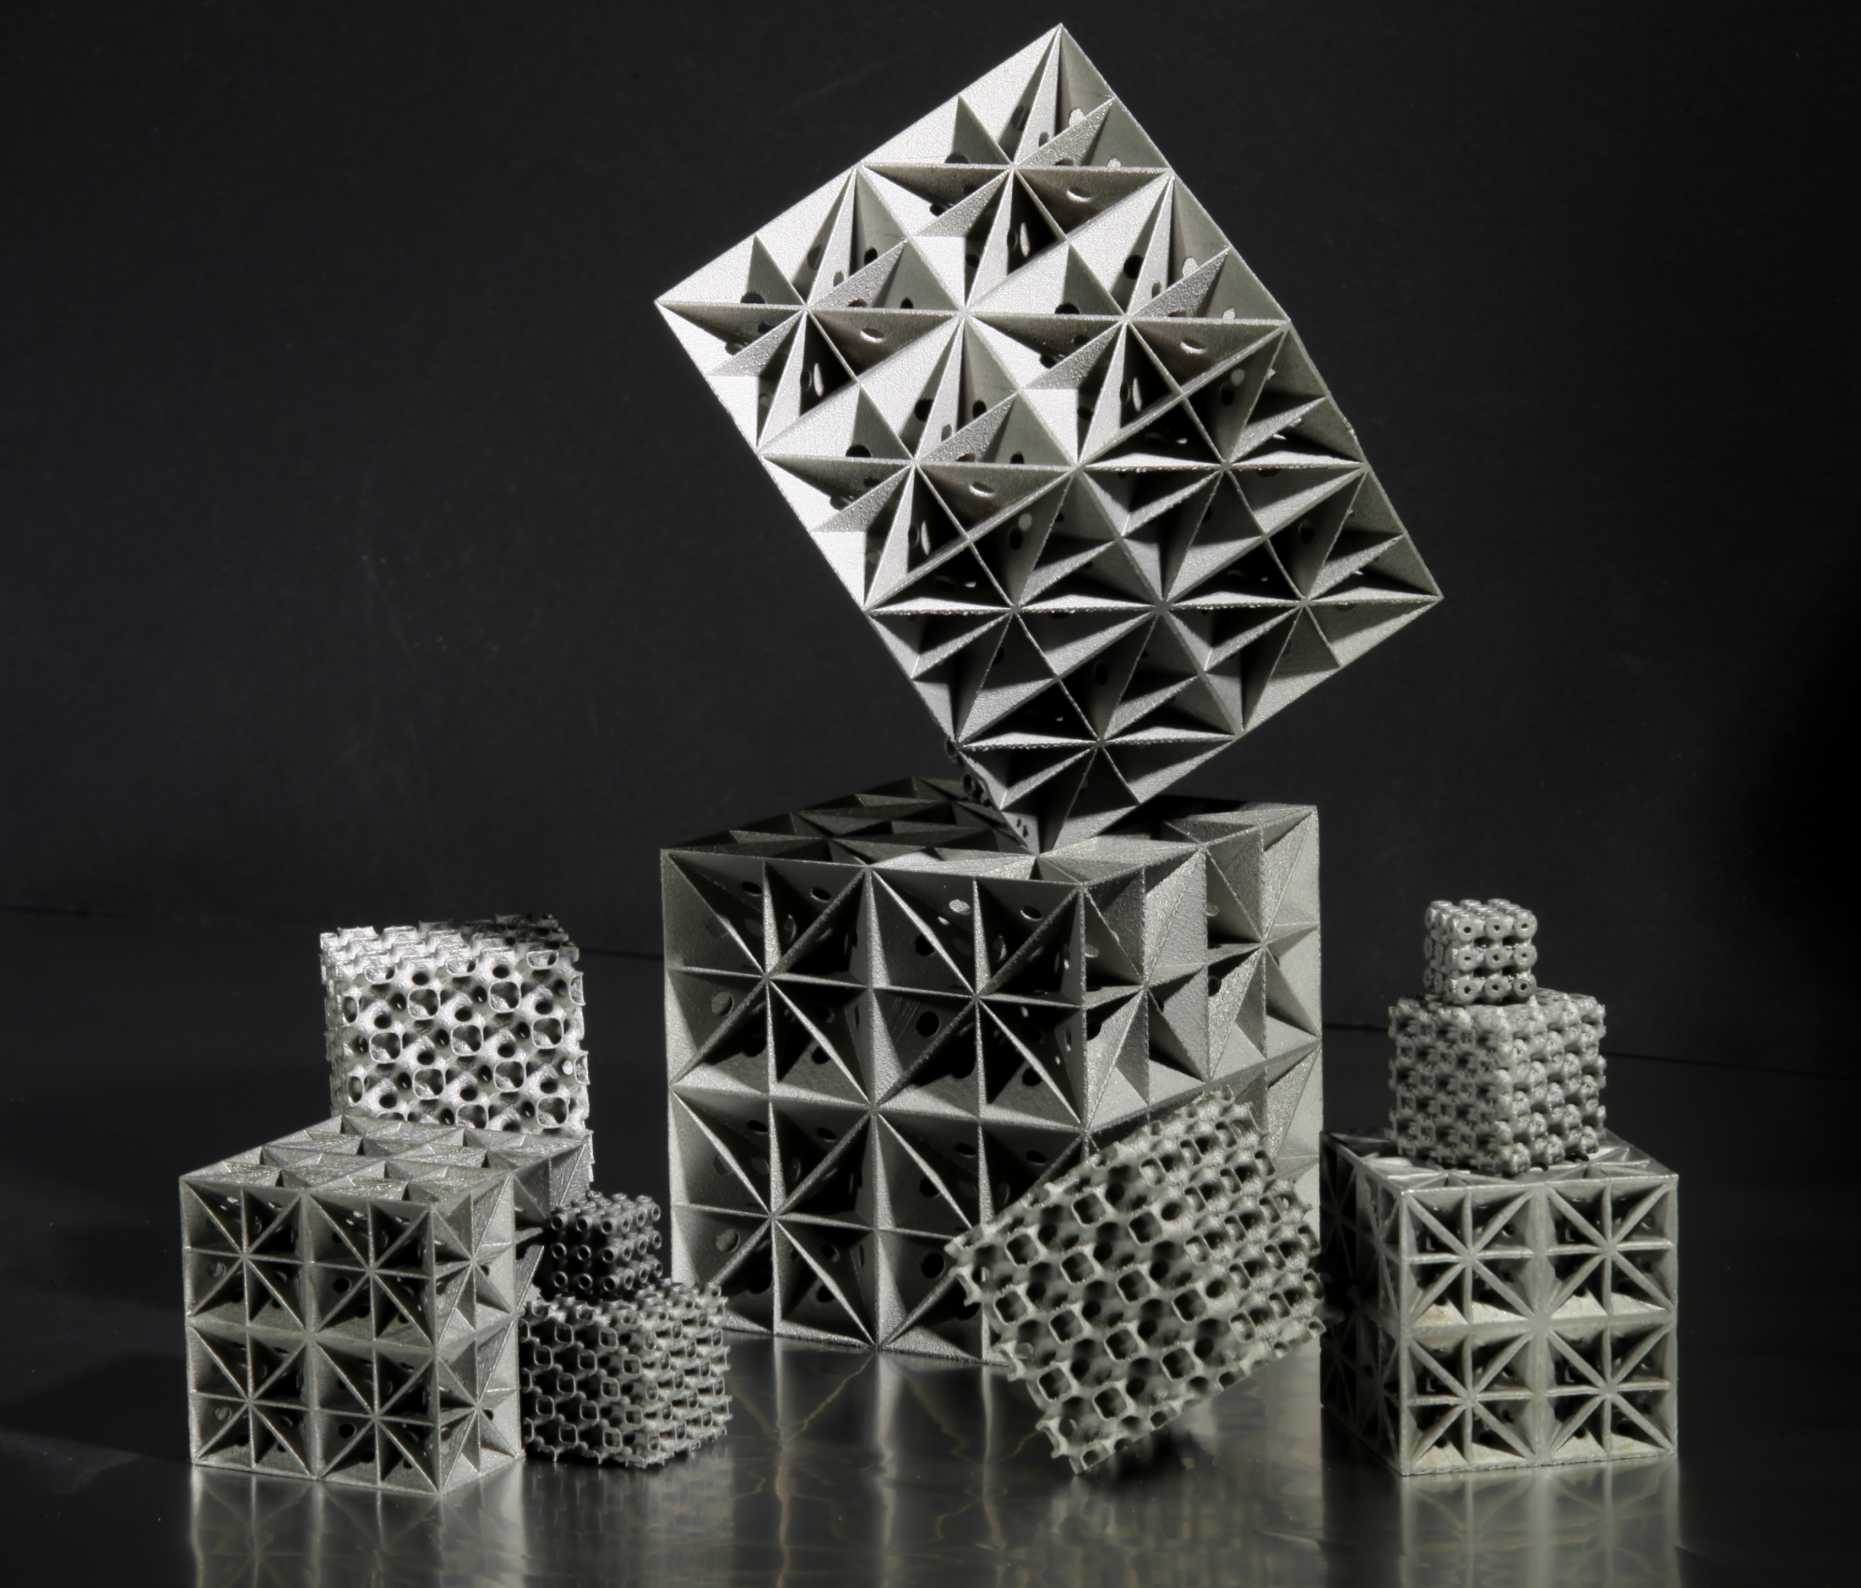 Additively-manufactured lattices